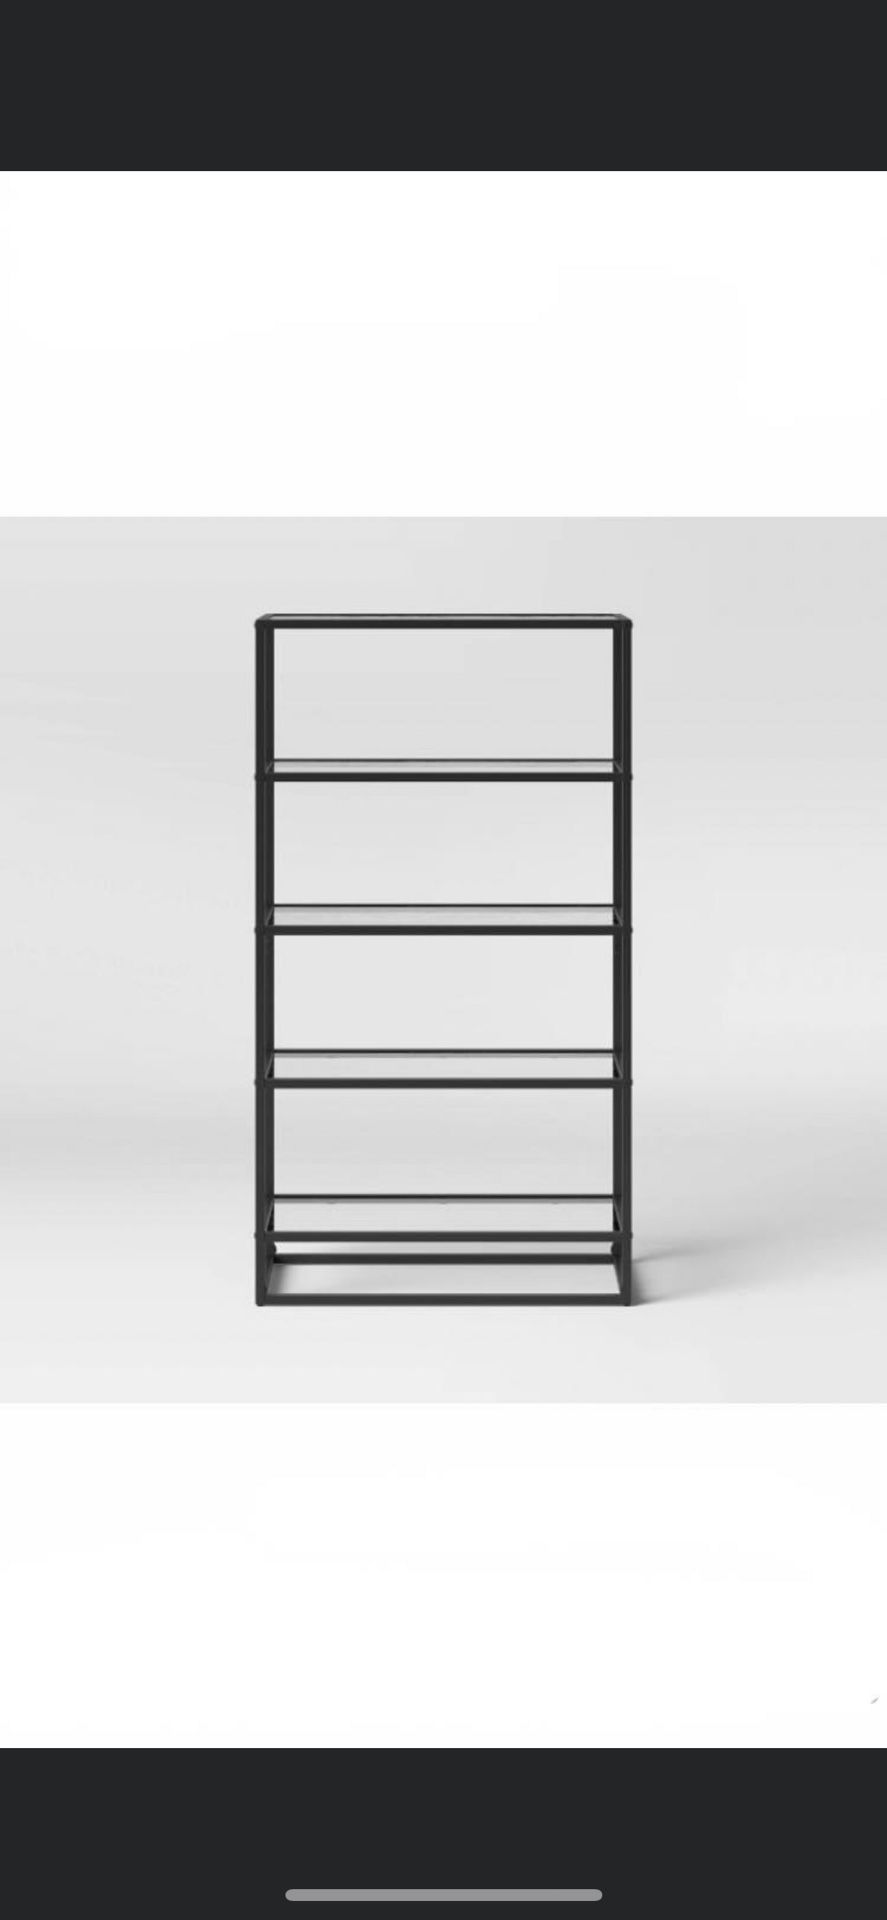 5S62 58.25” 5 Shelf Ada Bookshelf With Glass Shelves and Metal Frame- project 62        